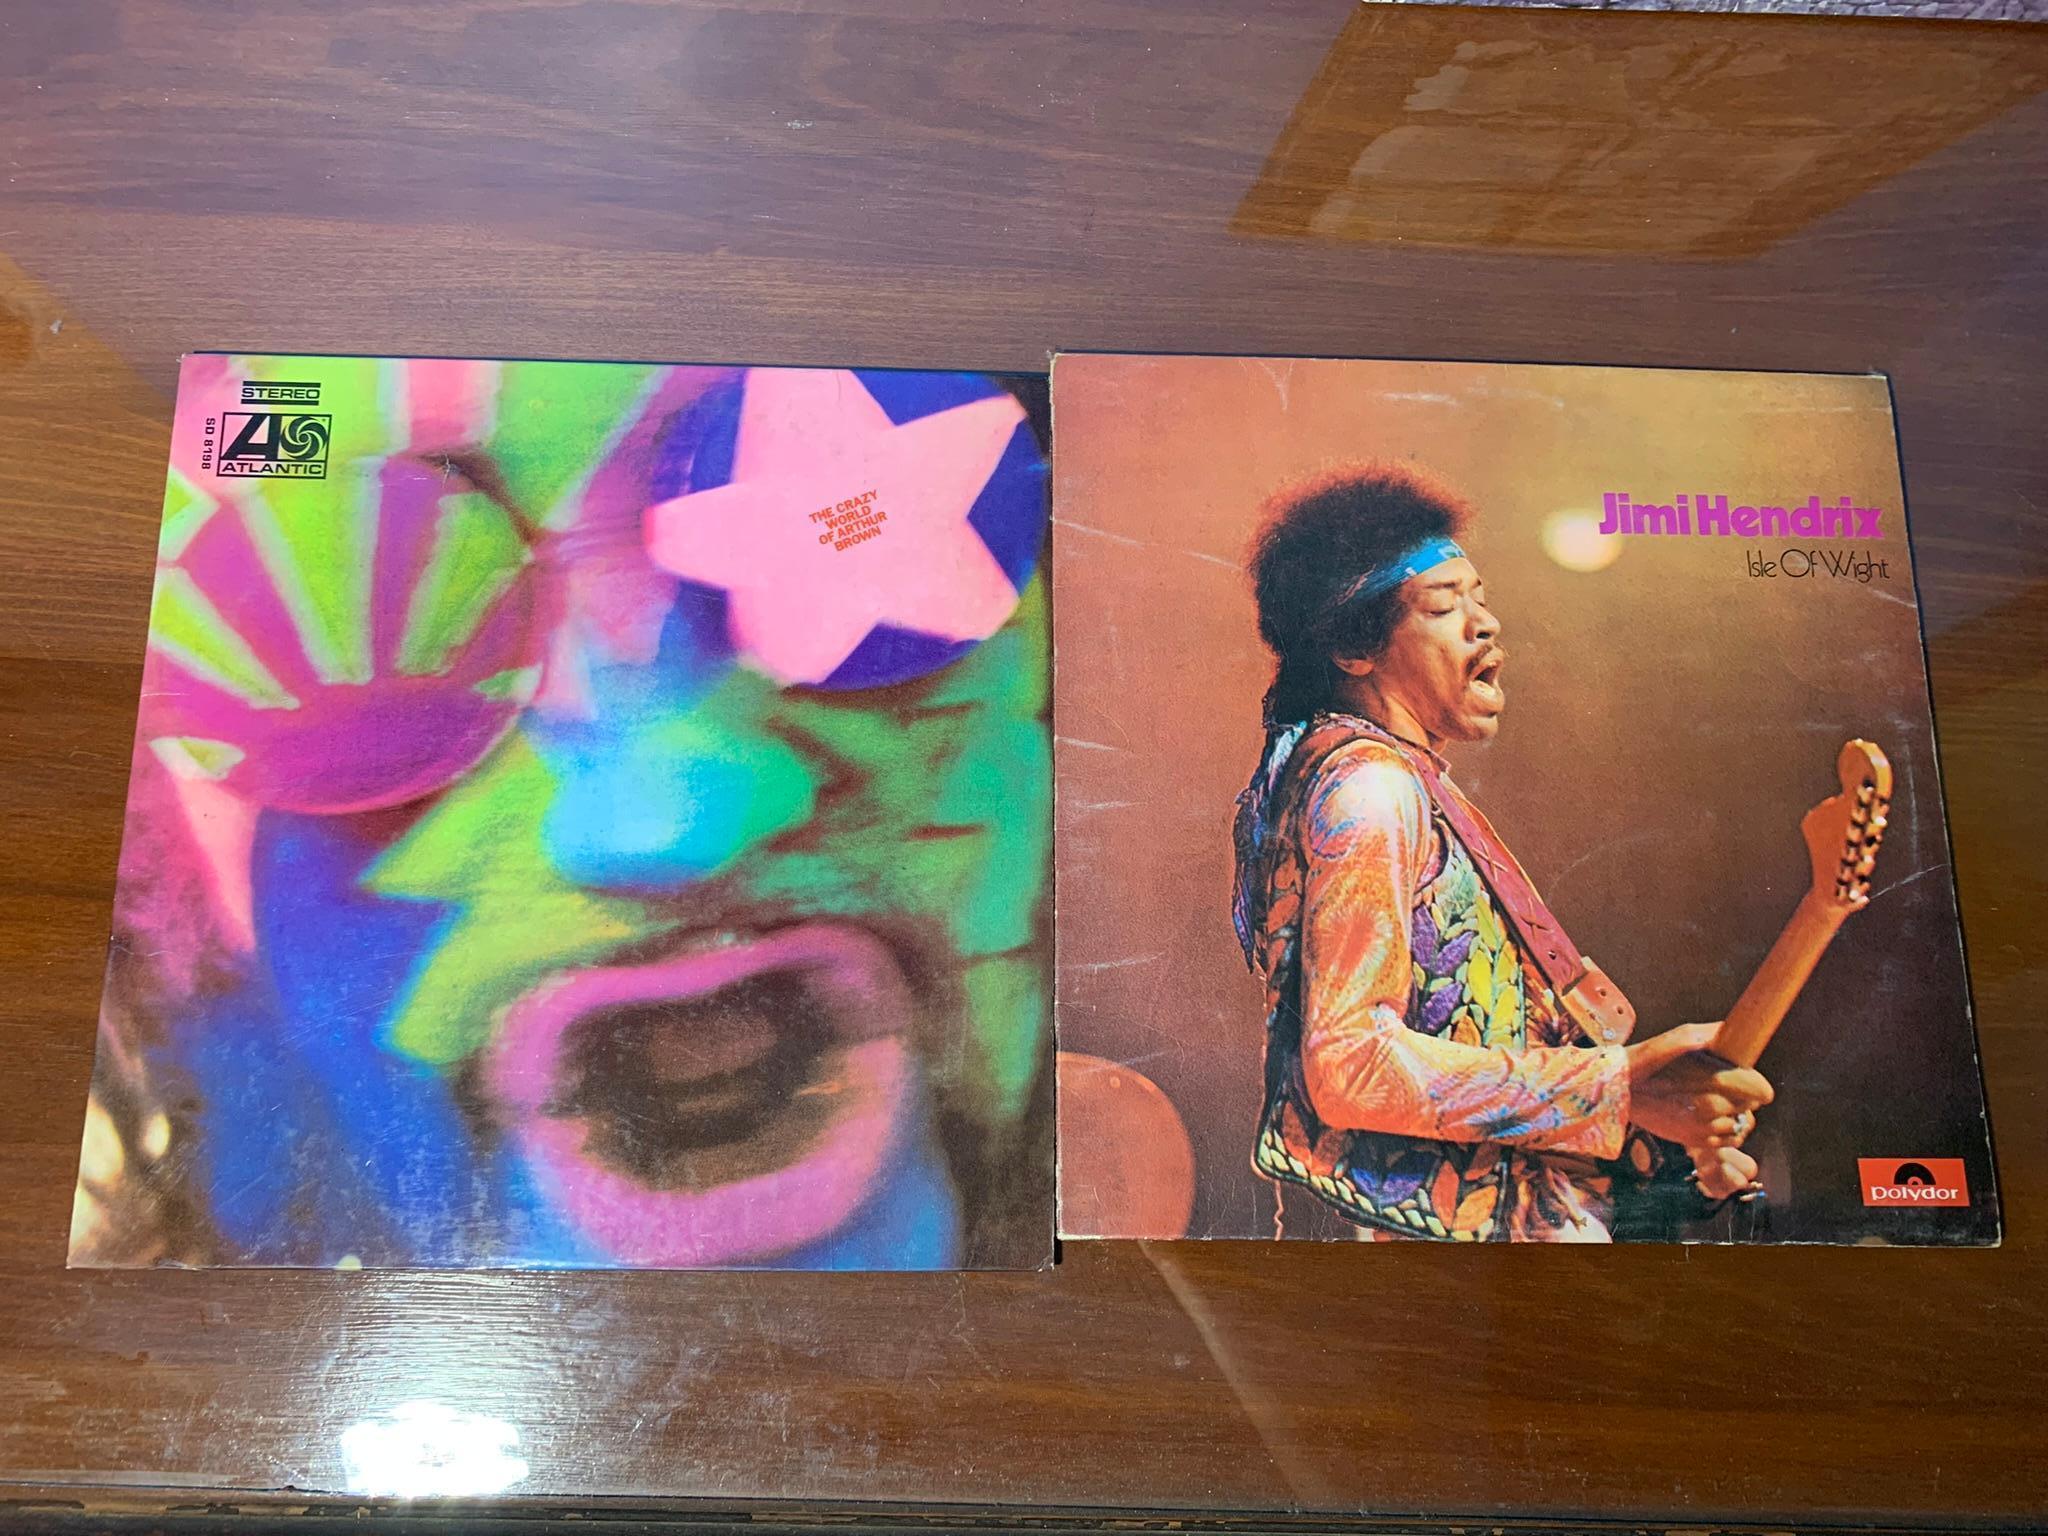 Group of 15 Records - Jimi Hendrix, Emitt Rhodes, Doors, The Rolling Stones & More